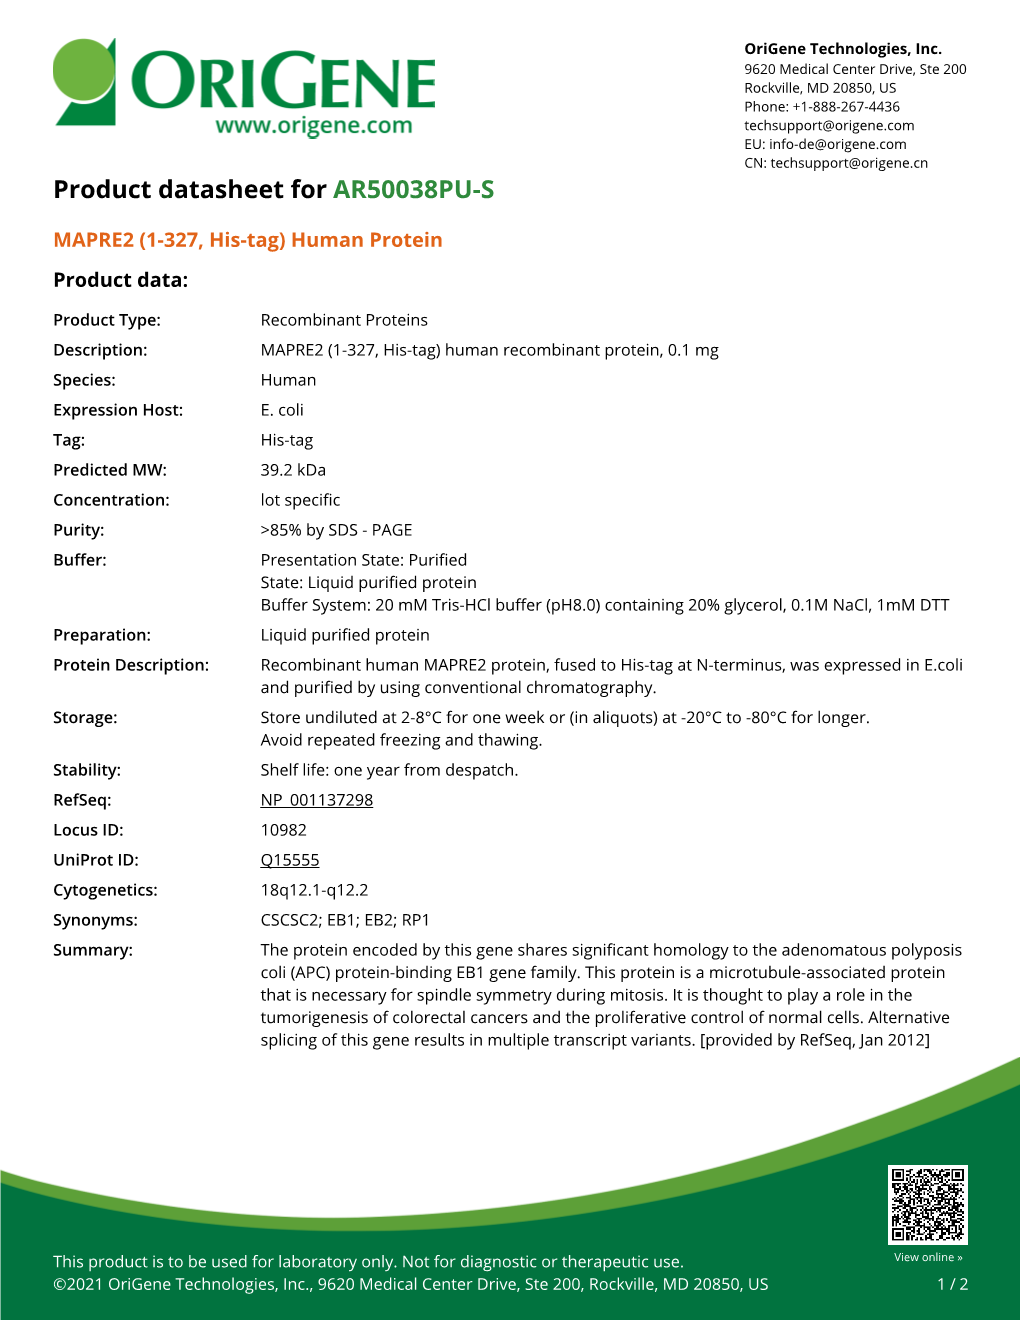 MAPRE2 (1-327, His-Tag) Human Protein – AR50038PU-S | Origene